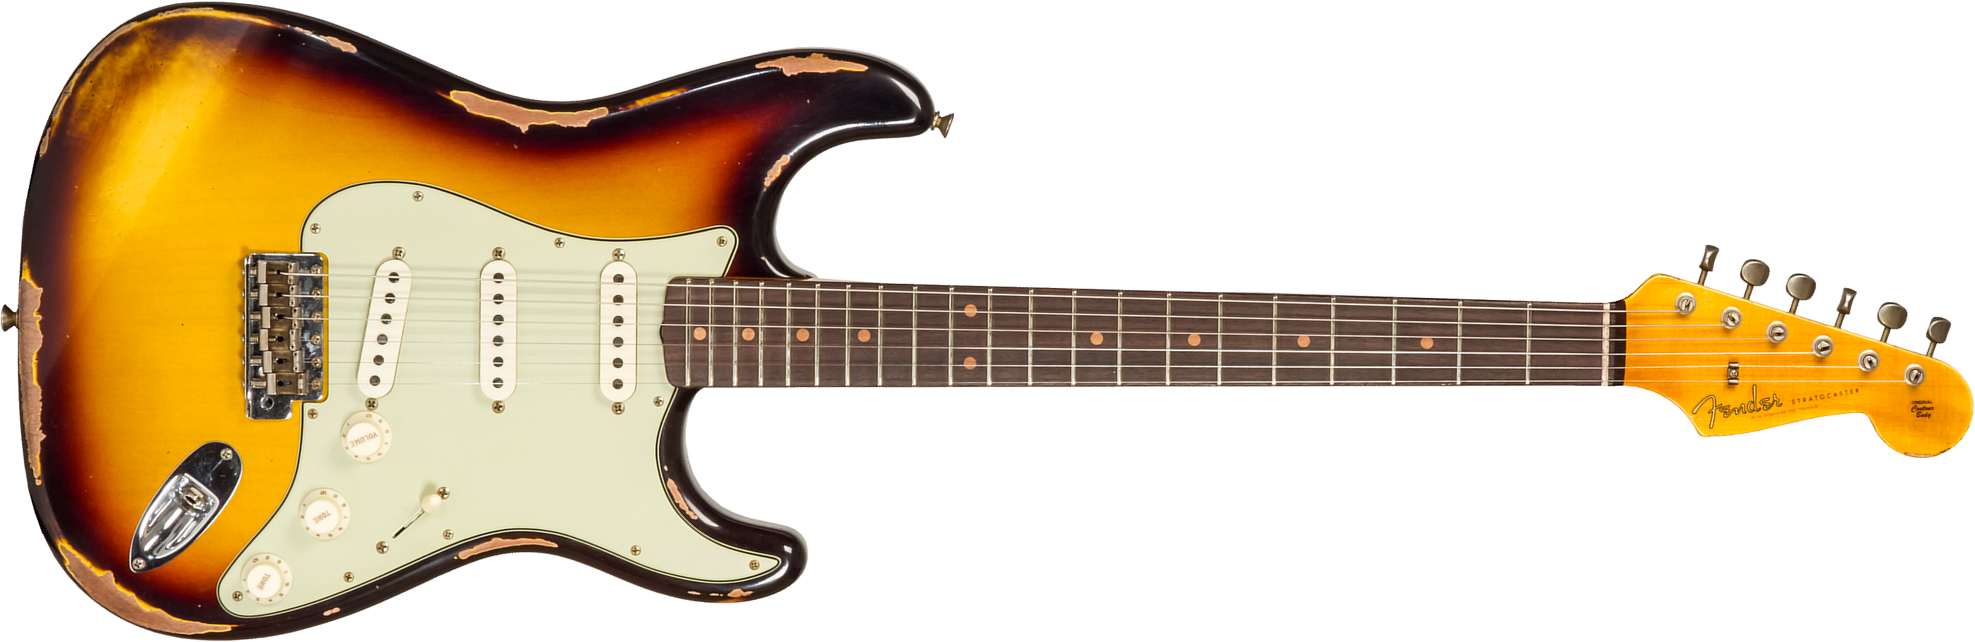 Fender Custom Shop Strat 1961 3s Trem Rw #cz573663 - Heavy Relic Aged 3-color Sunburst - E-Gitarre in Str-Form - Main picture